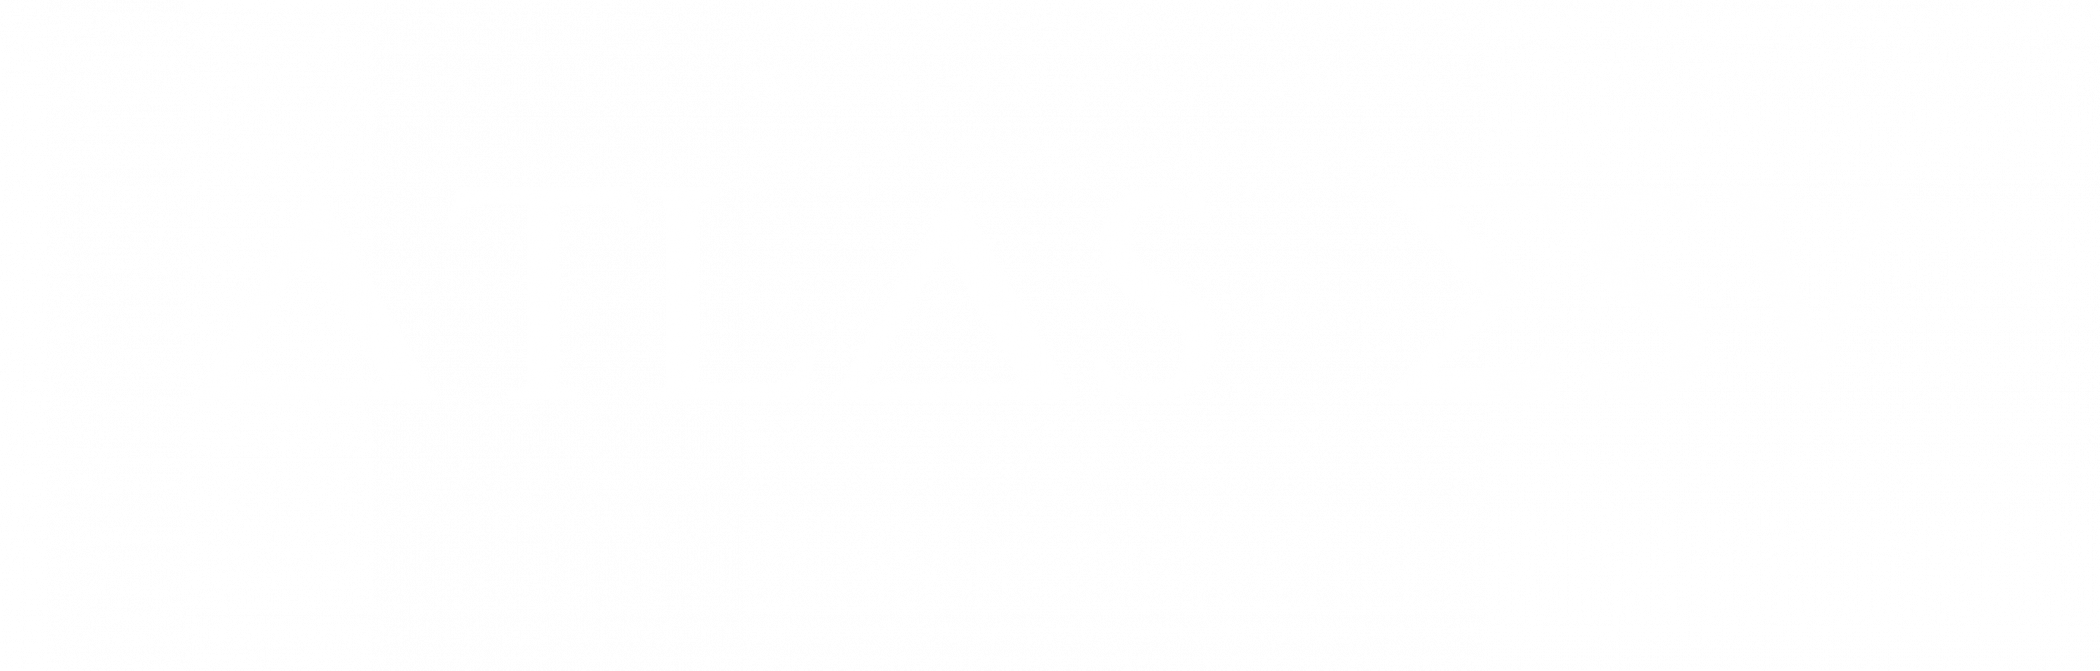 atlas-esu-text-front-jumper